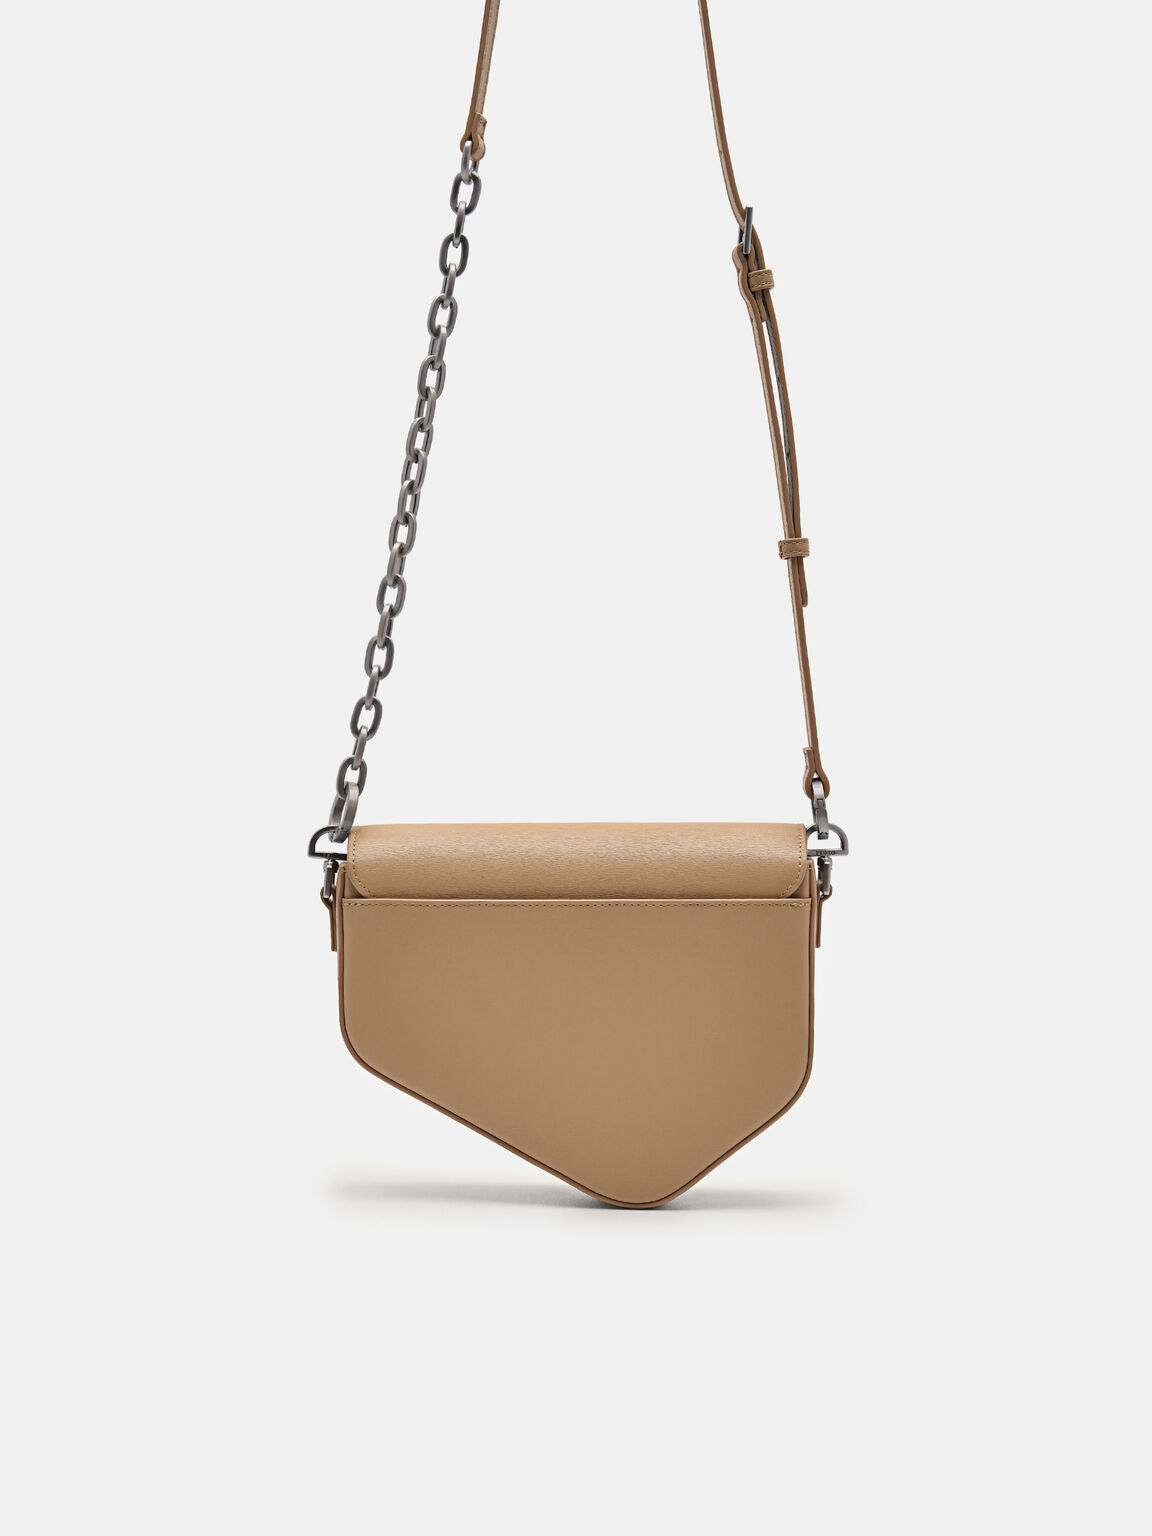 Taper Leather Mini Sling Bag, Sand, hi-res